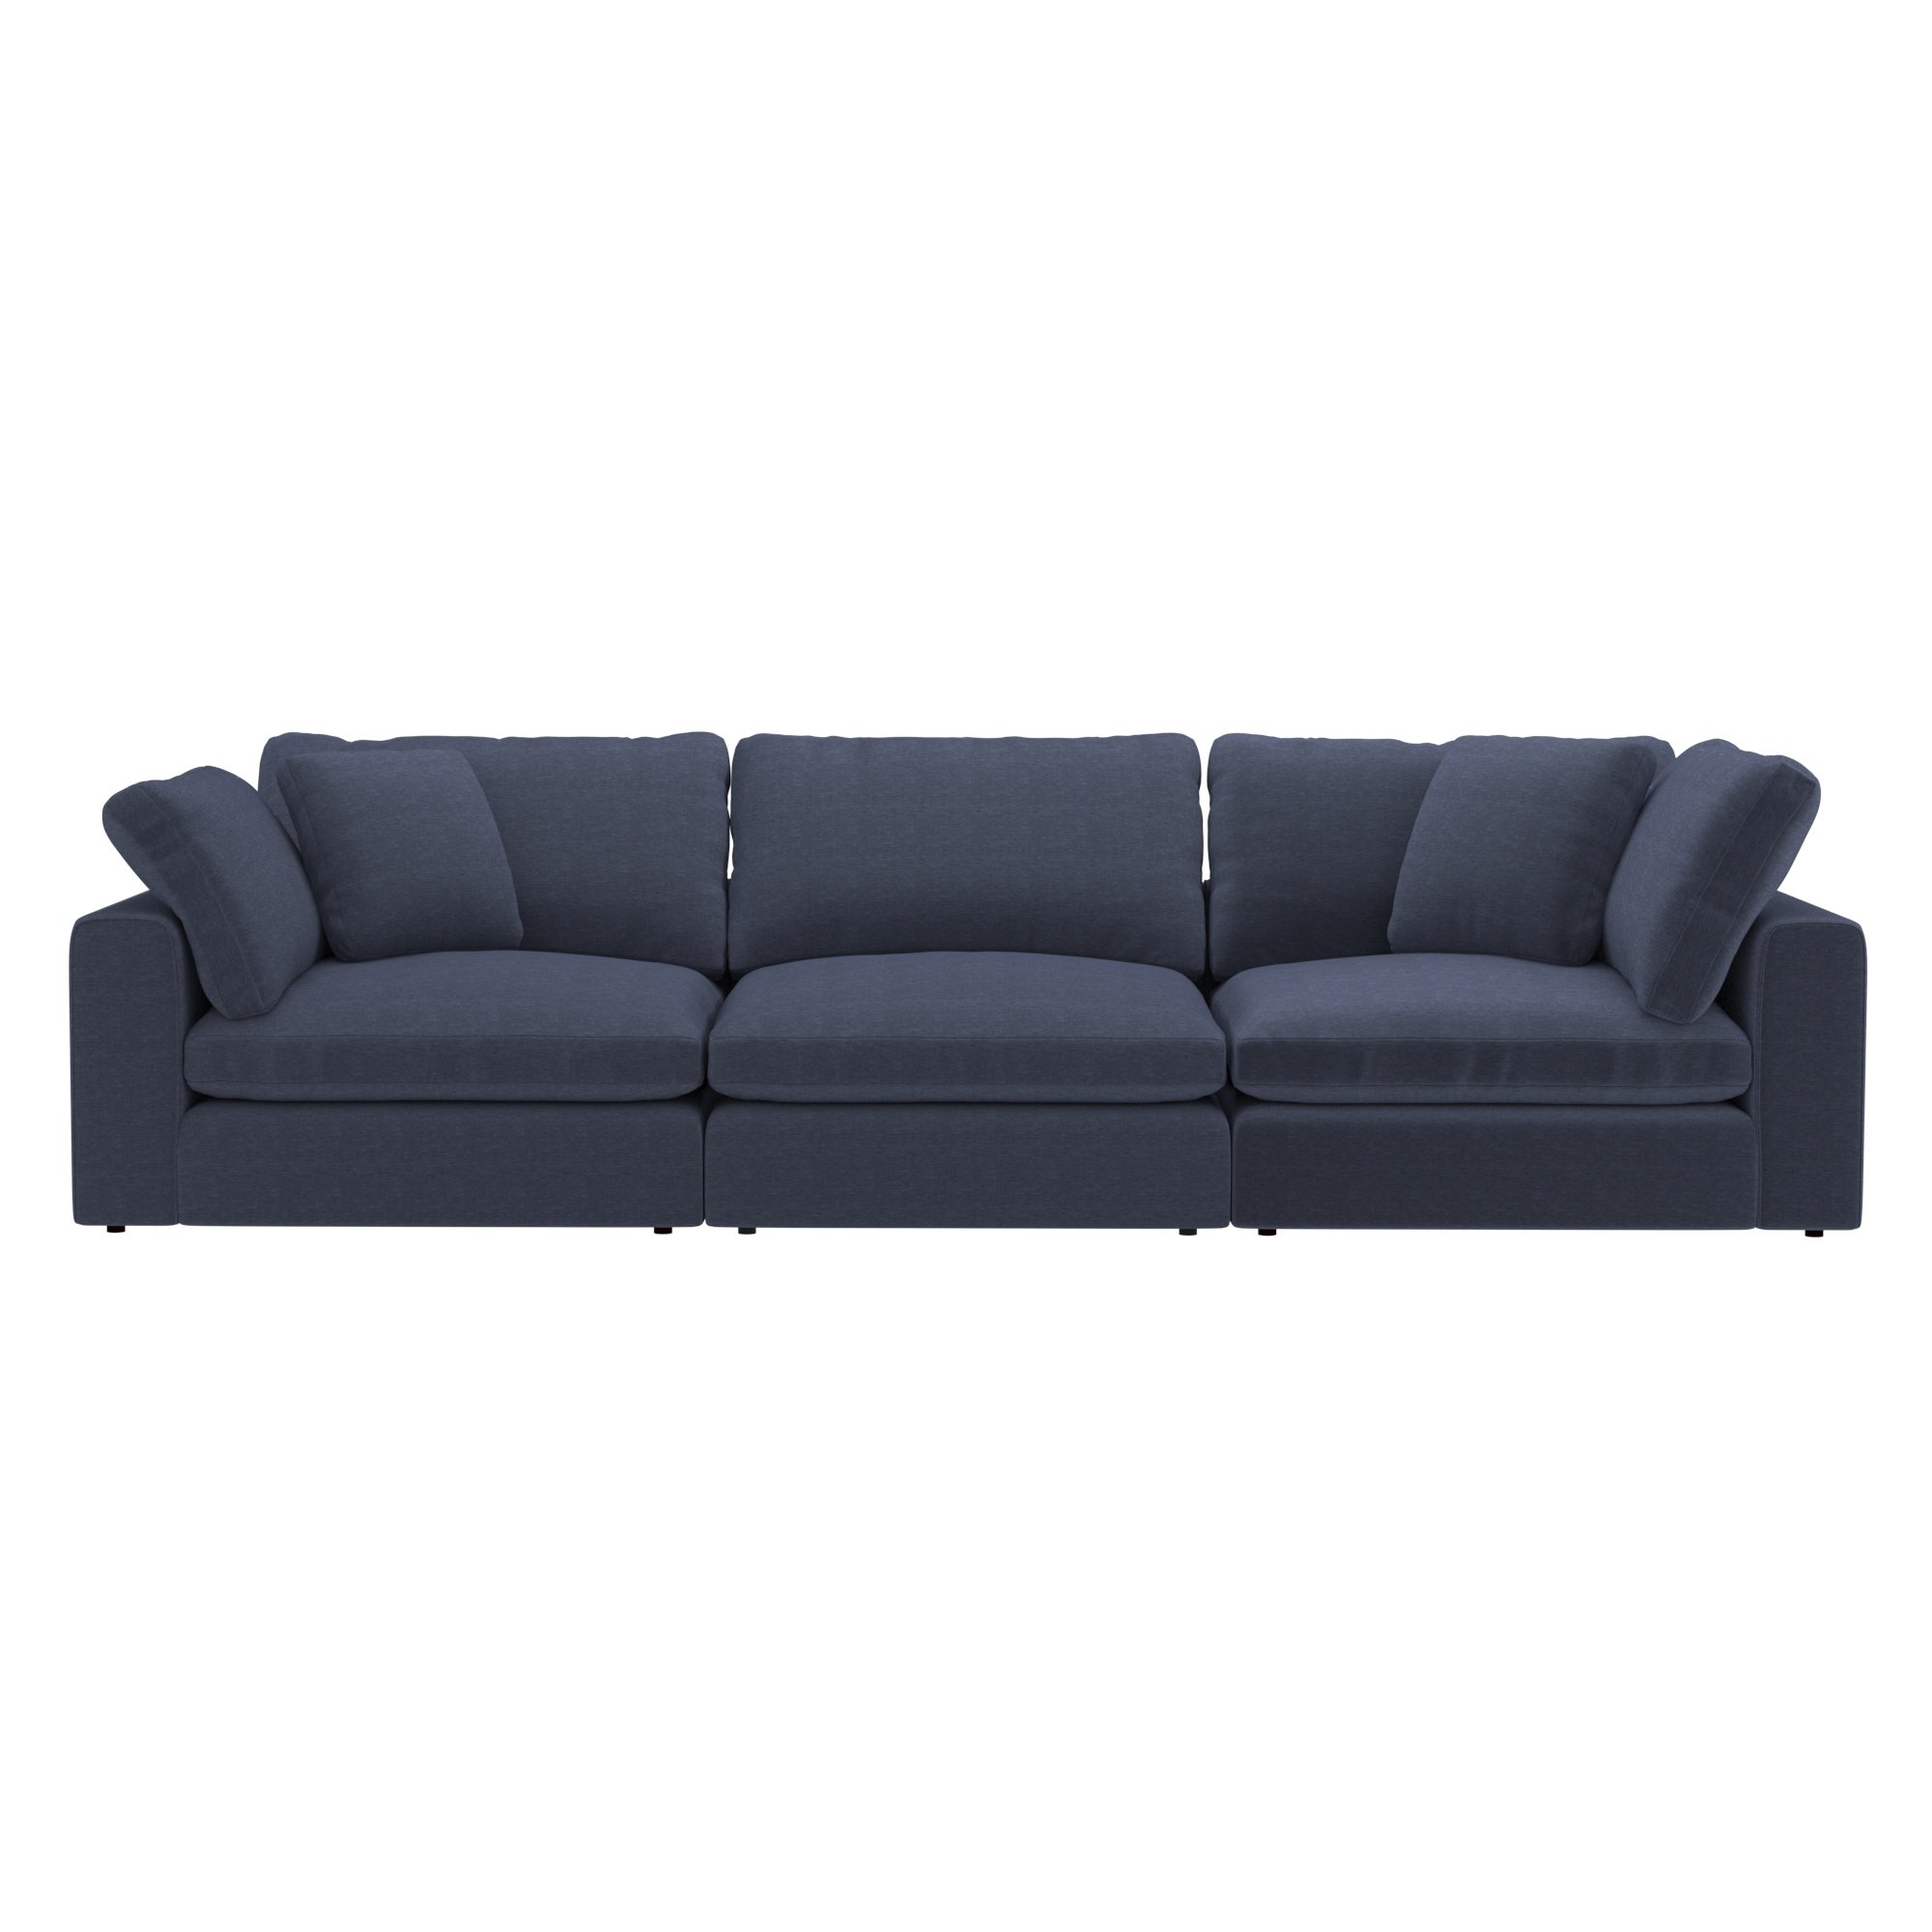 Artenis 3 Seater Sofa, Blue Fabric | Barker & Stonehouse